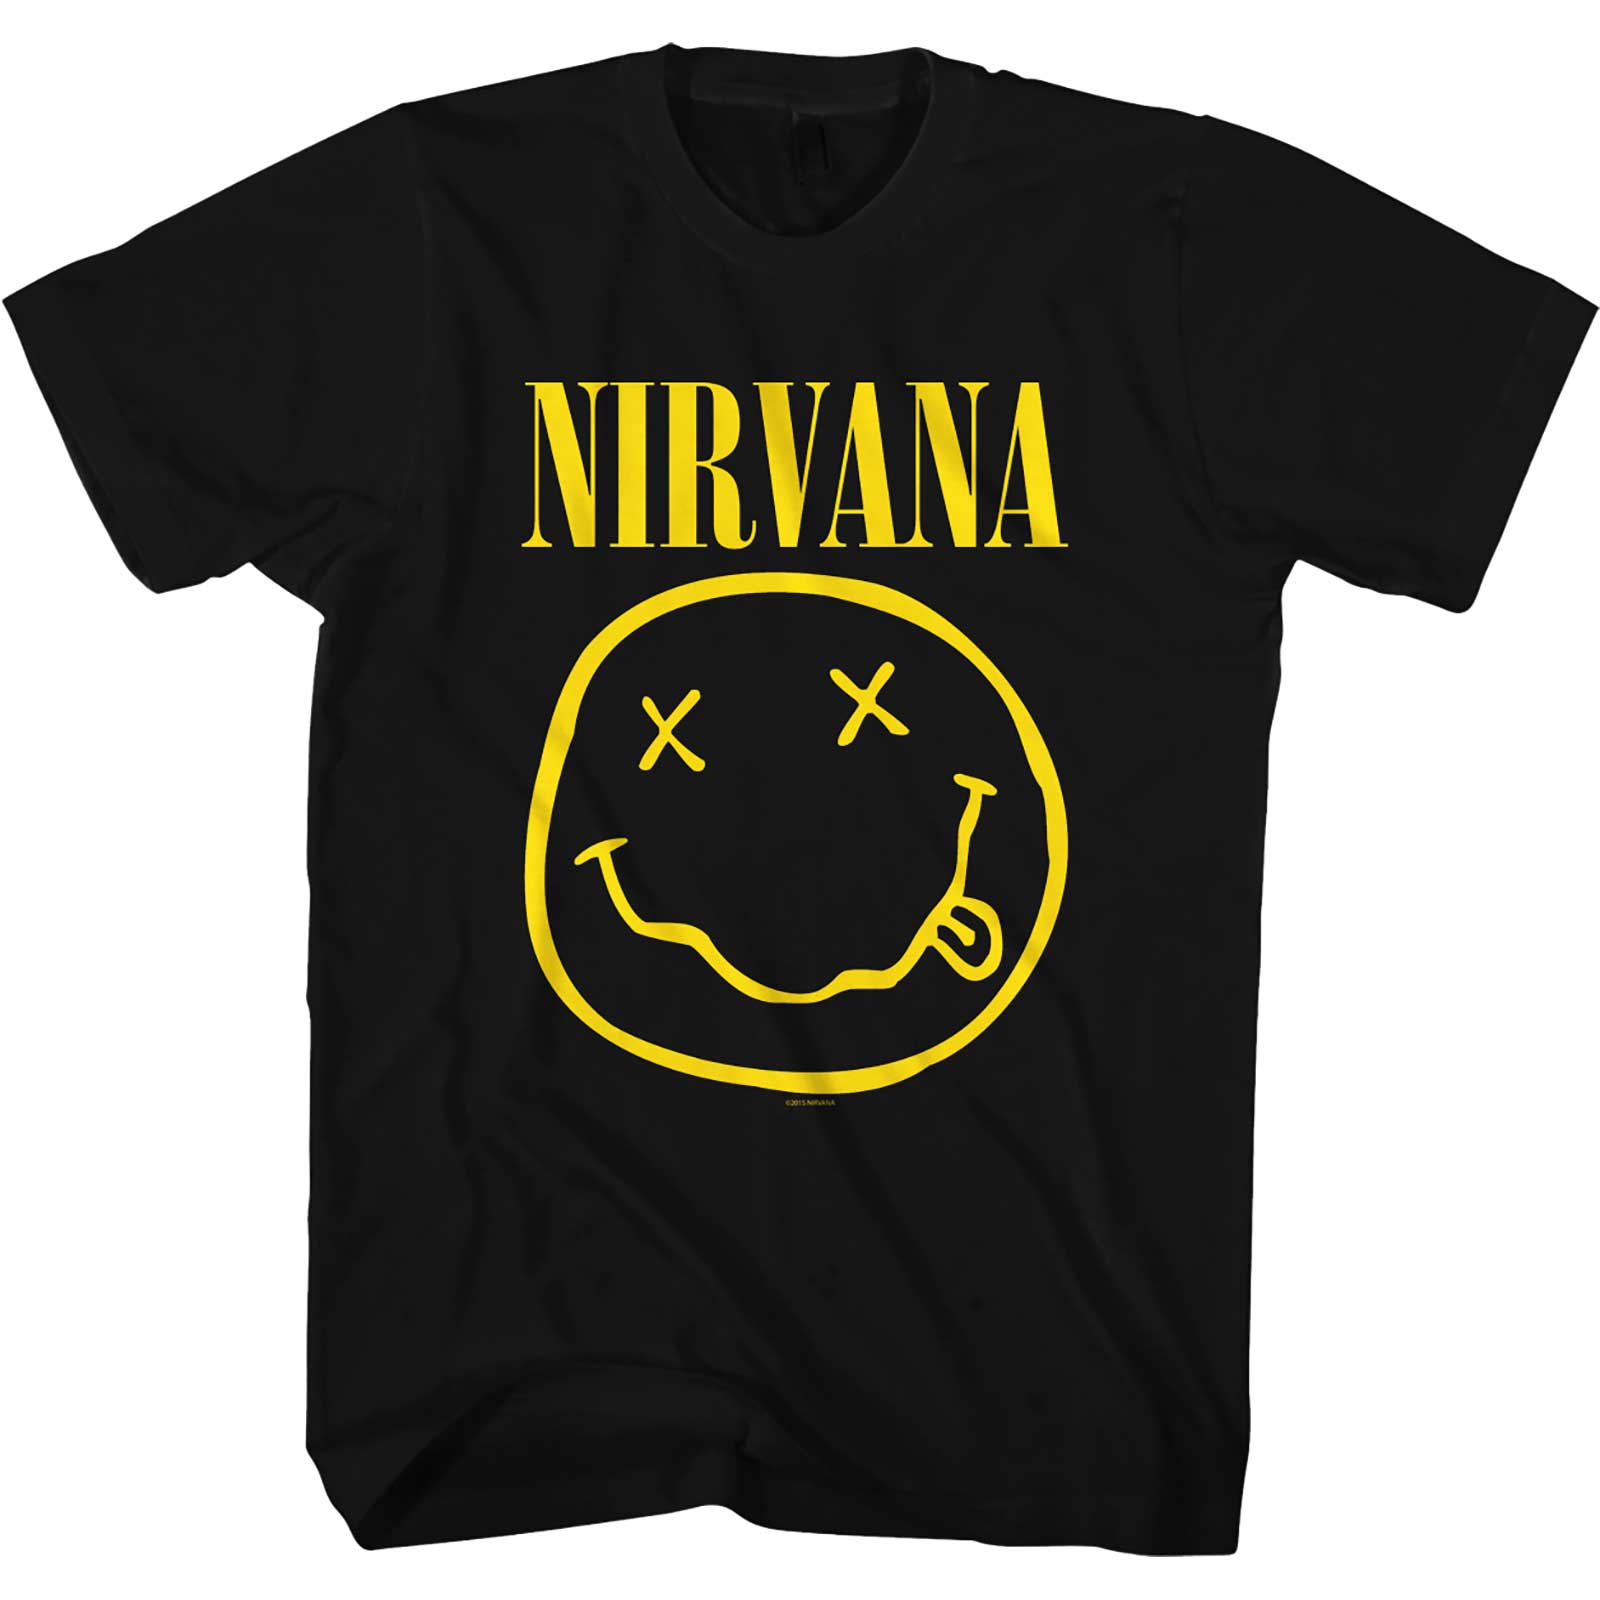 nirvana_unisex_t-shirt:_yellow_smiley